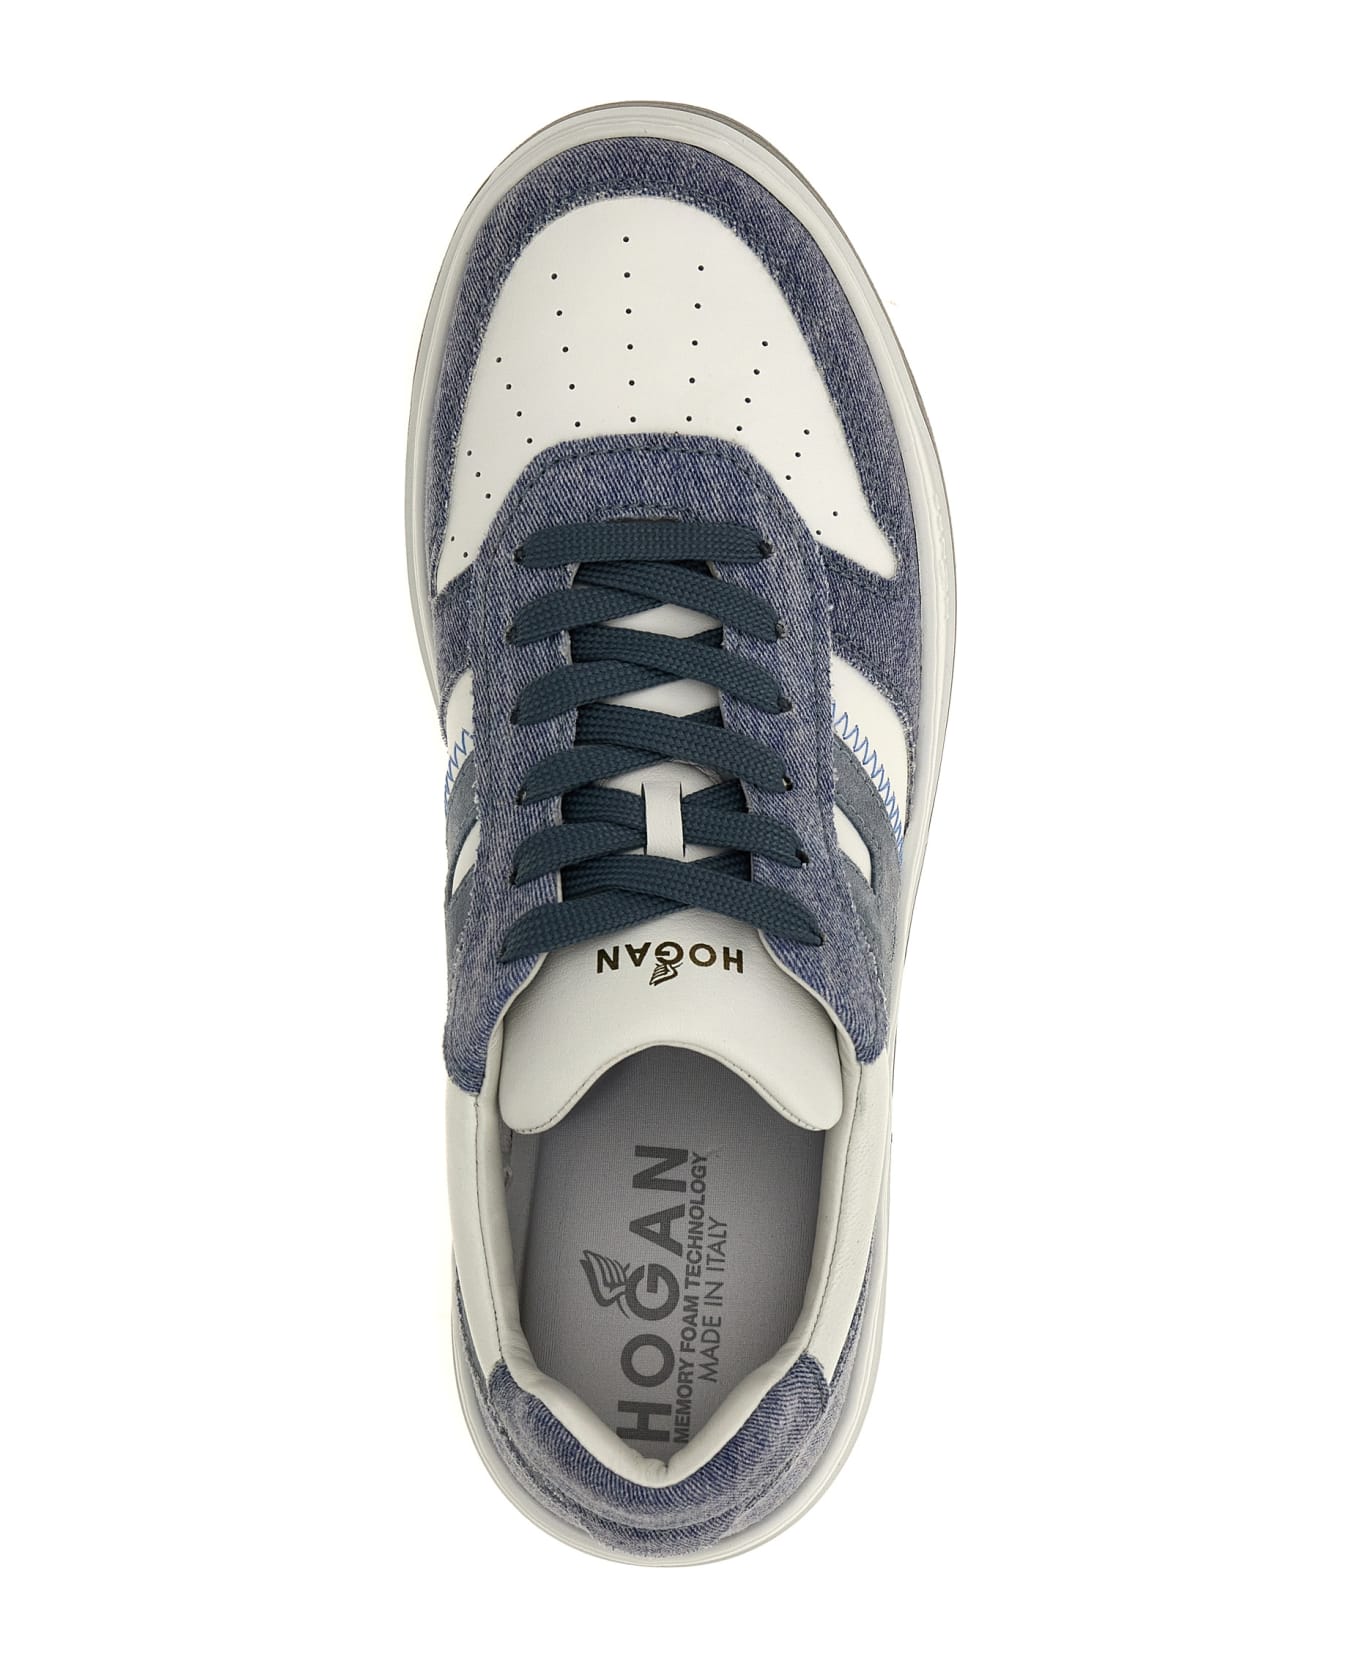 Hogan 'h630' Sneakers - Light Blue